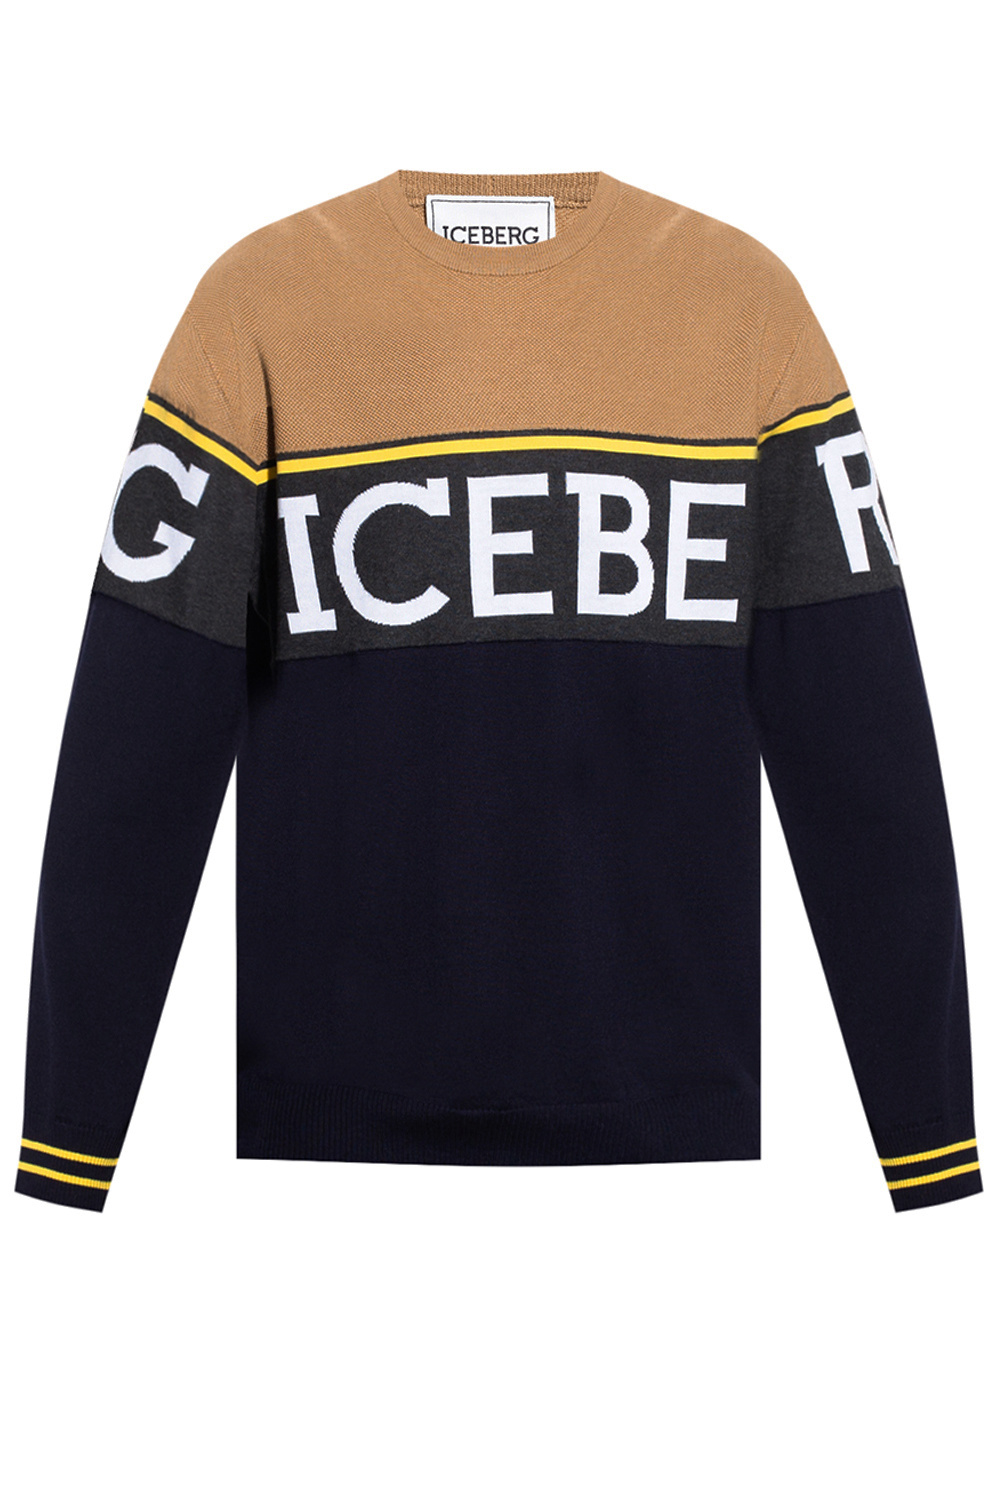 Iceberg sweater tee with logo